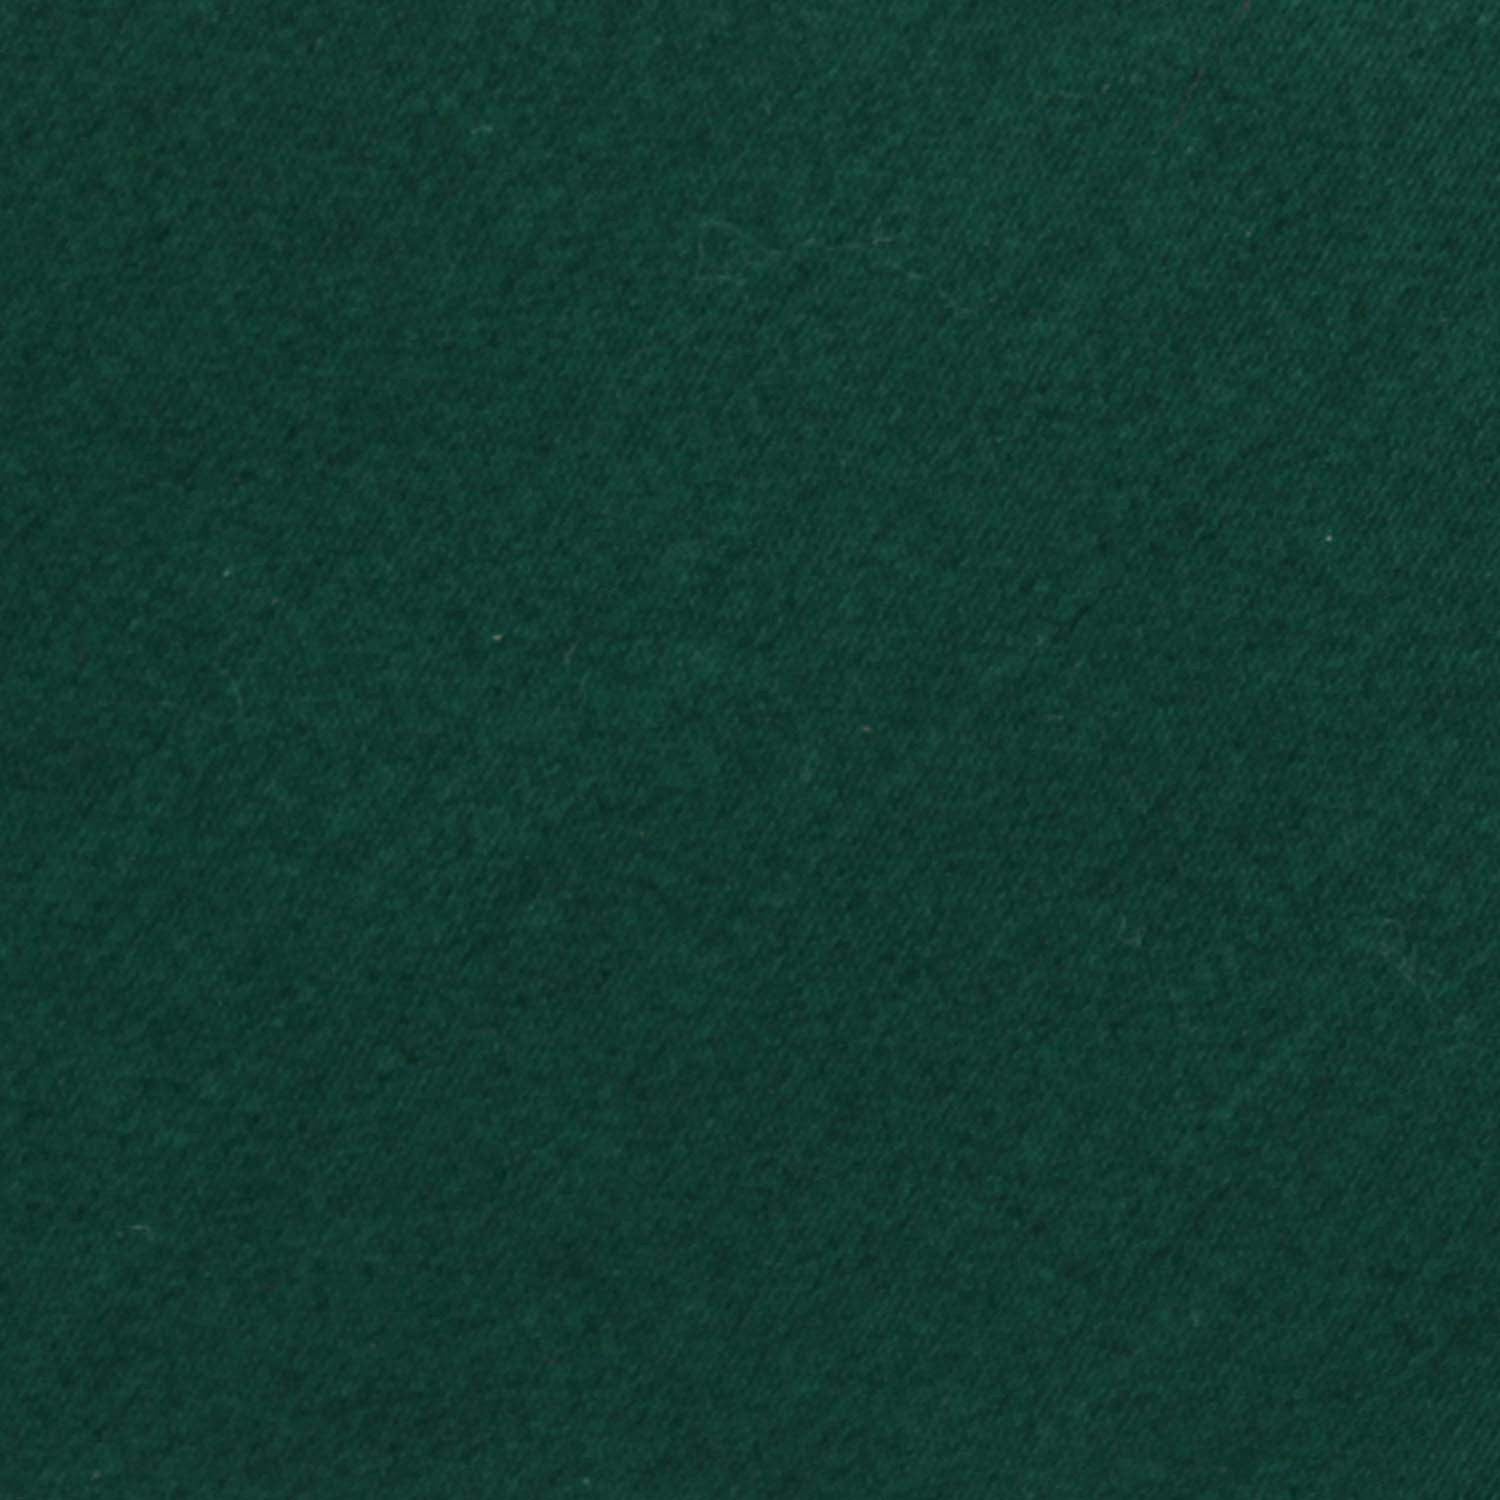 Emerald Green Cotton Fabric Self Tie Diamond Tip Bow TieC162